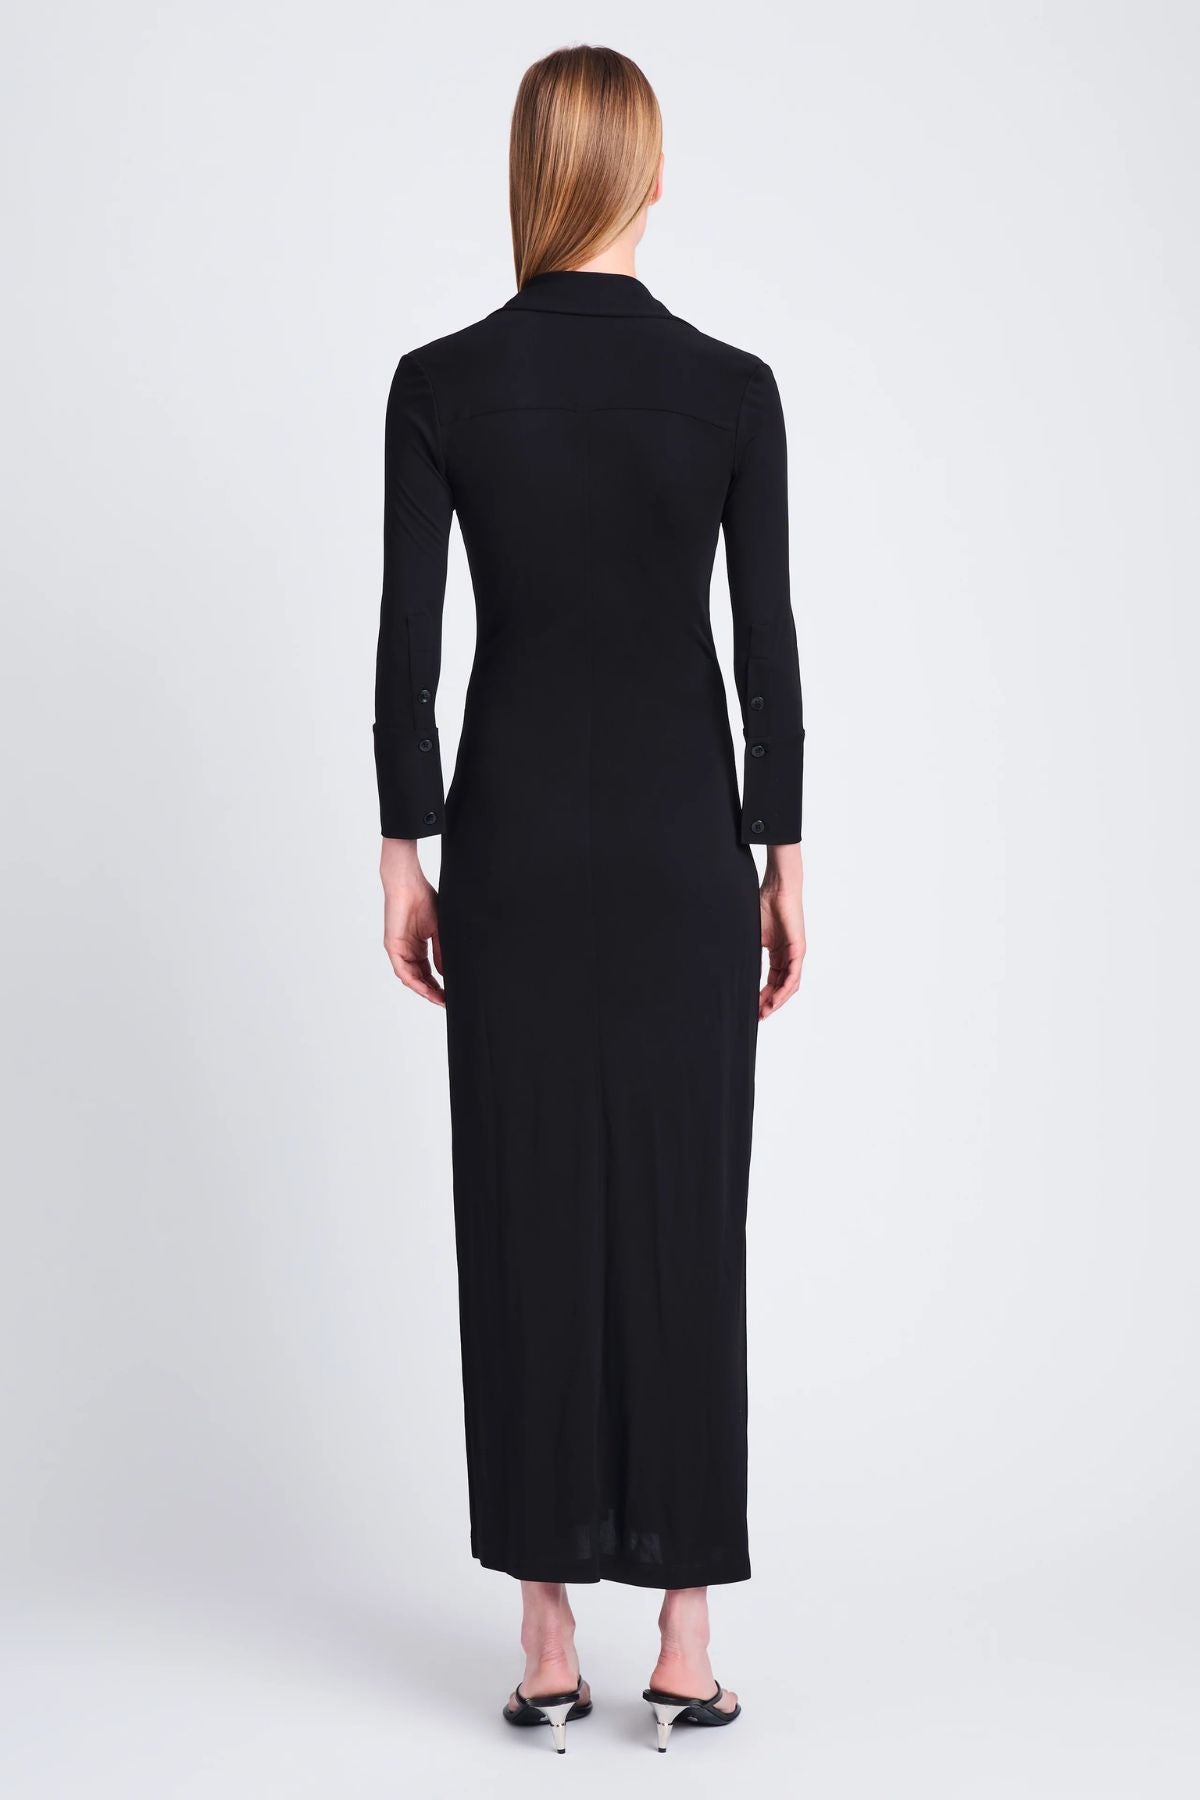 Proenza Schouler White Label Clara Dress - Black